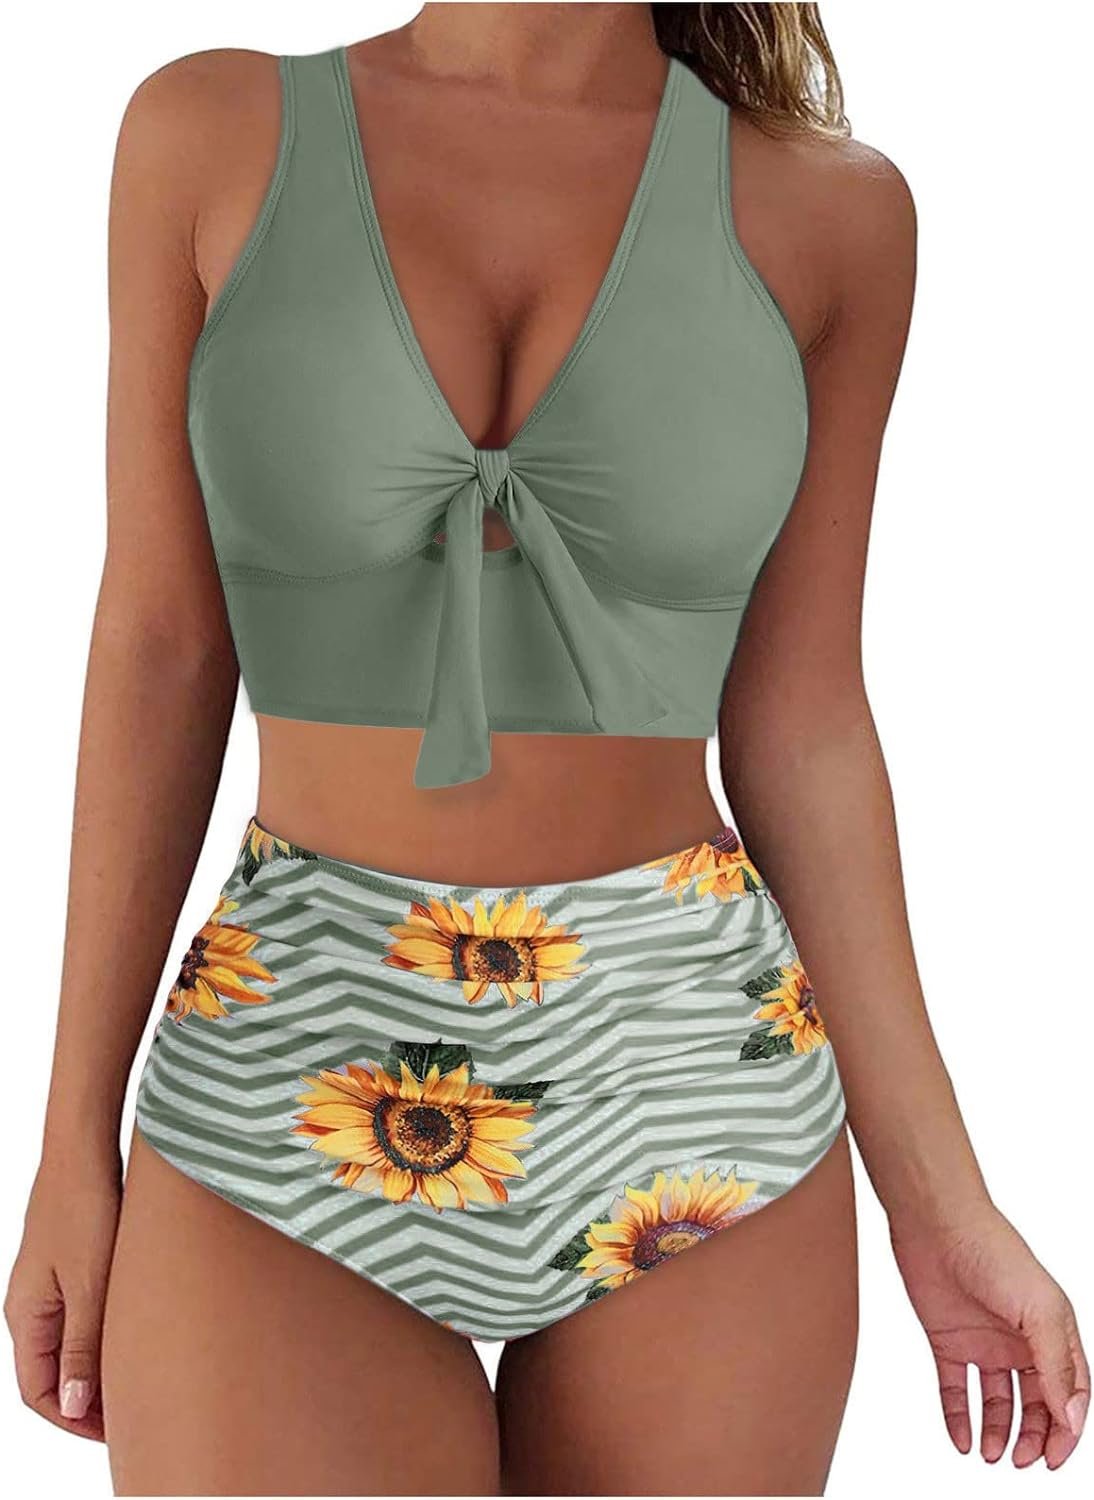 NaRHbrg Sunflower Bikini Swimsuit for Women Summer Fashion Cute Sexy Two Piece Push Up Tankini Sets Bathing Suit